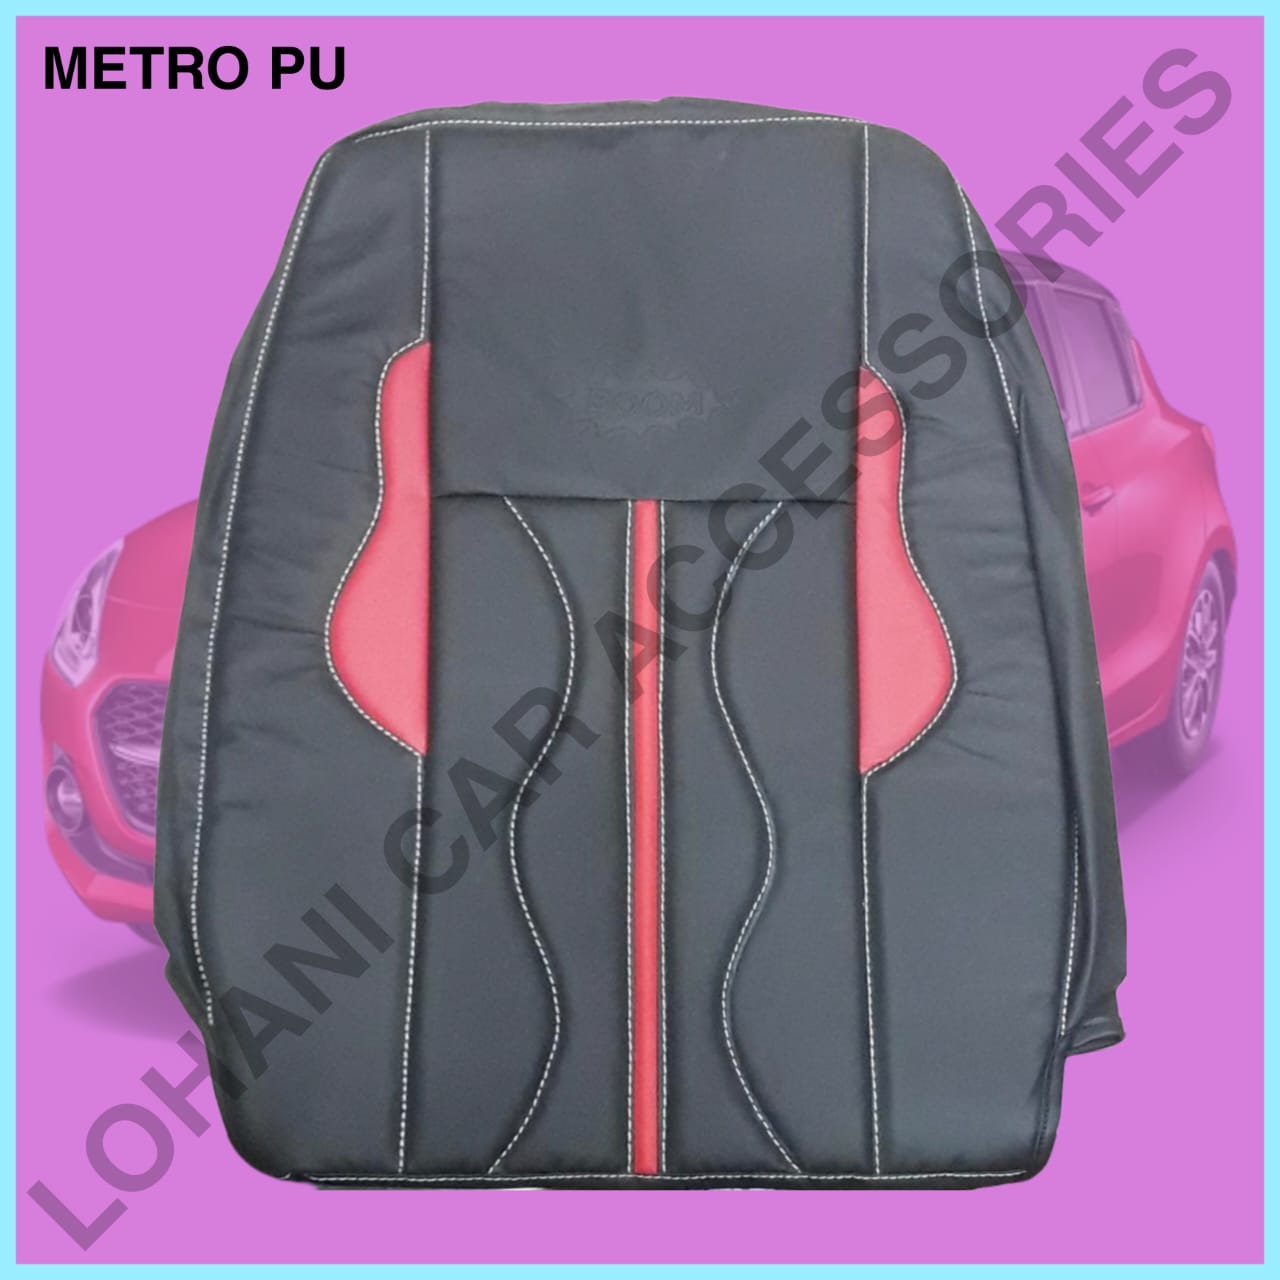 Metro Seat Cover